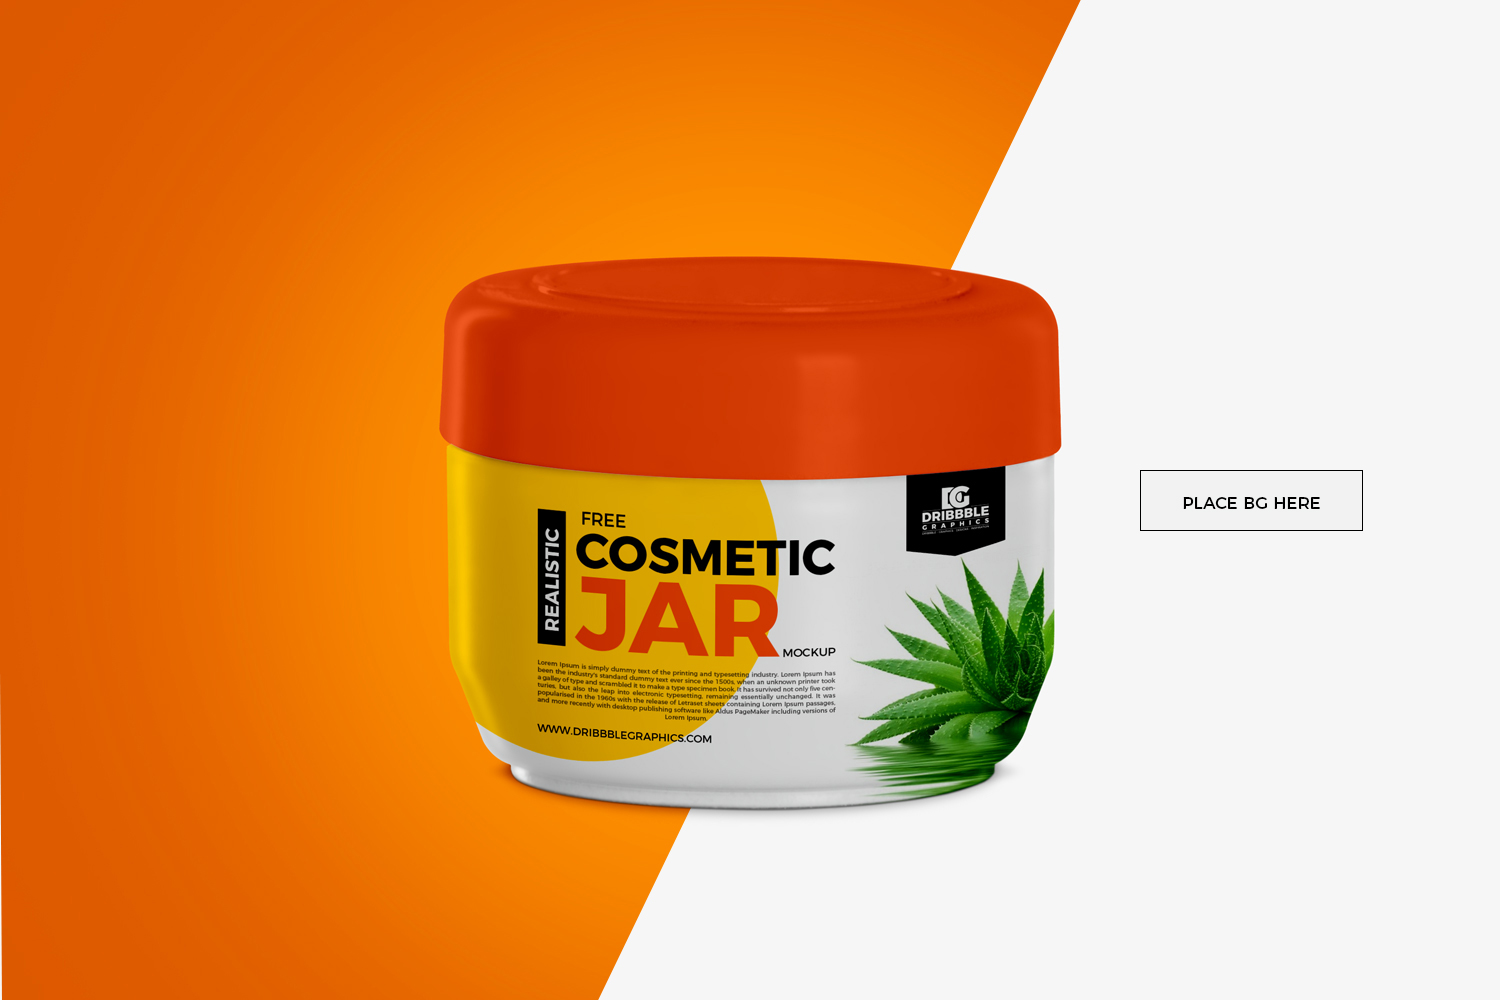 Free-Cosmetic-Jar-Mockup-600